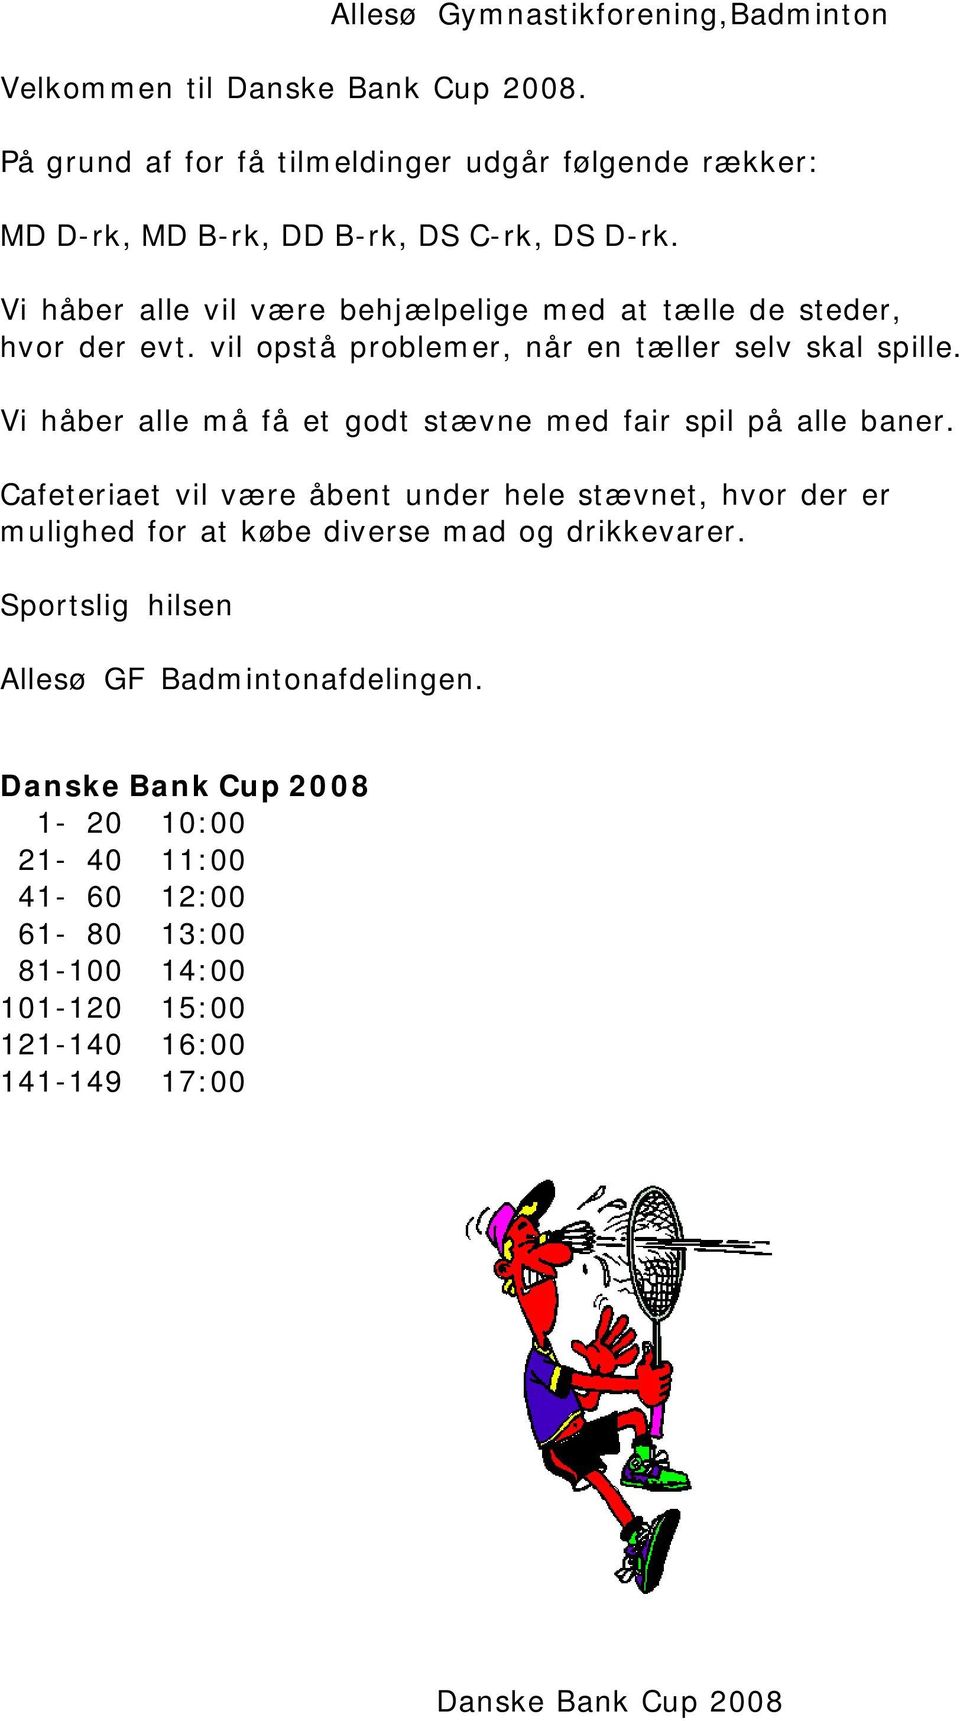 Allesø Gymnastikforening,Badminton - PDF Free Download